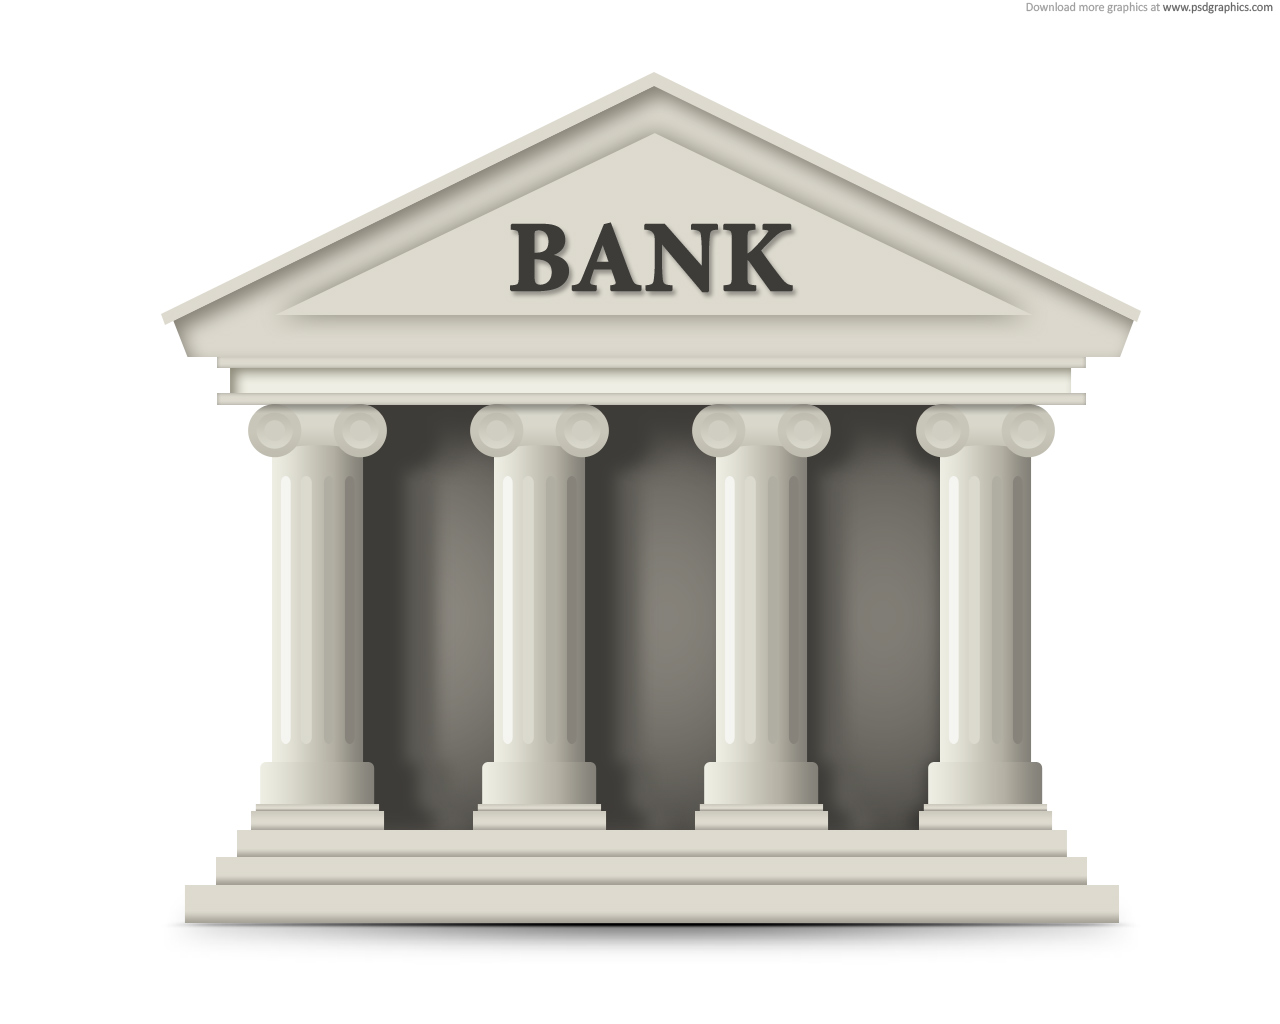 धमाधम वित्तीय विवरण सार्वजनिक गर्दै बैंक, शेयरधनीलाई छैन नाफा, तरलता हुने संकेत